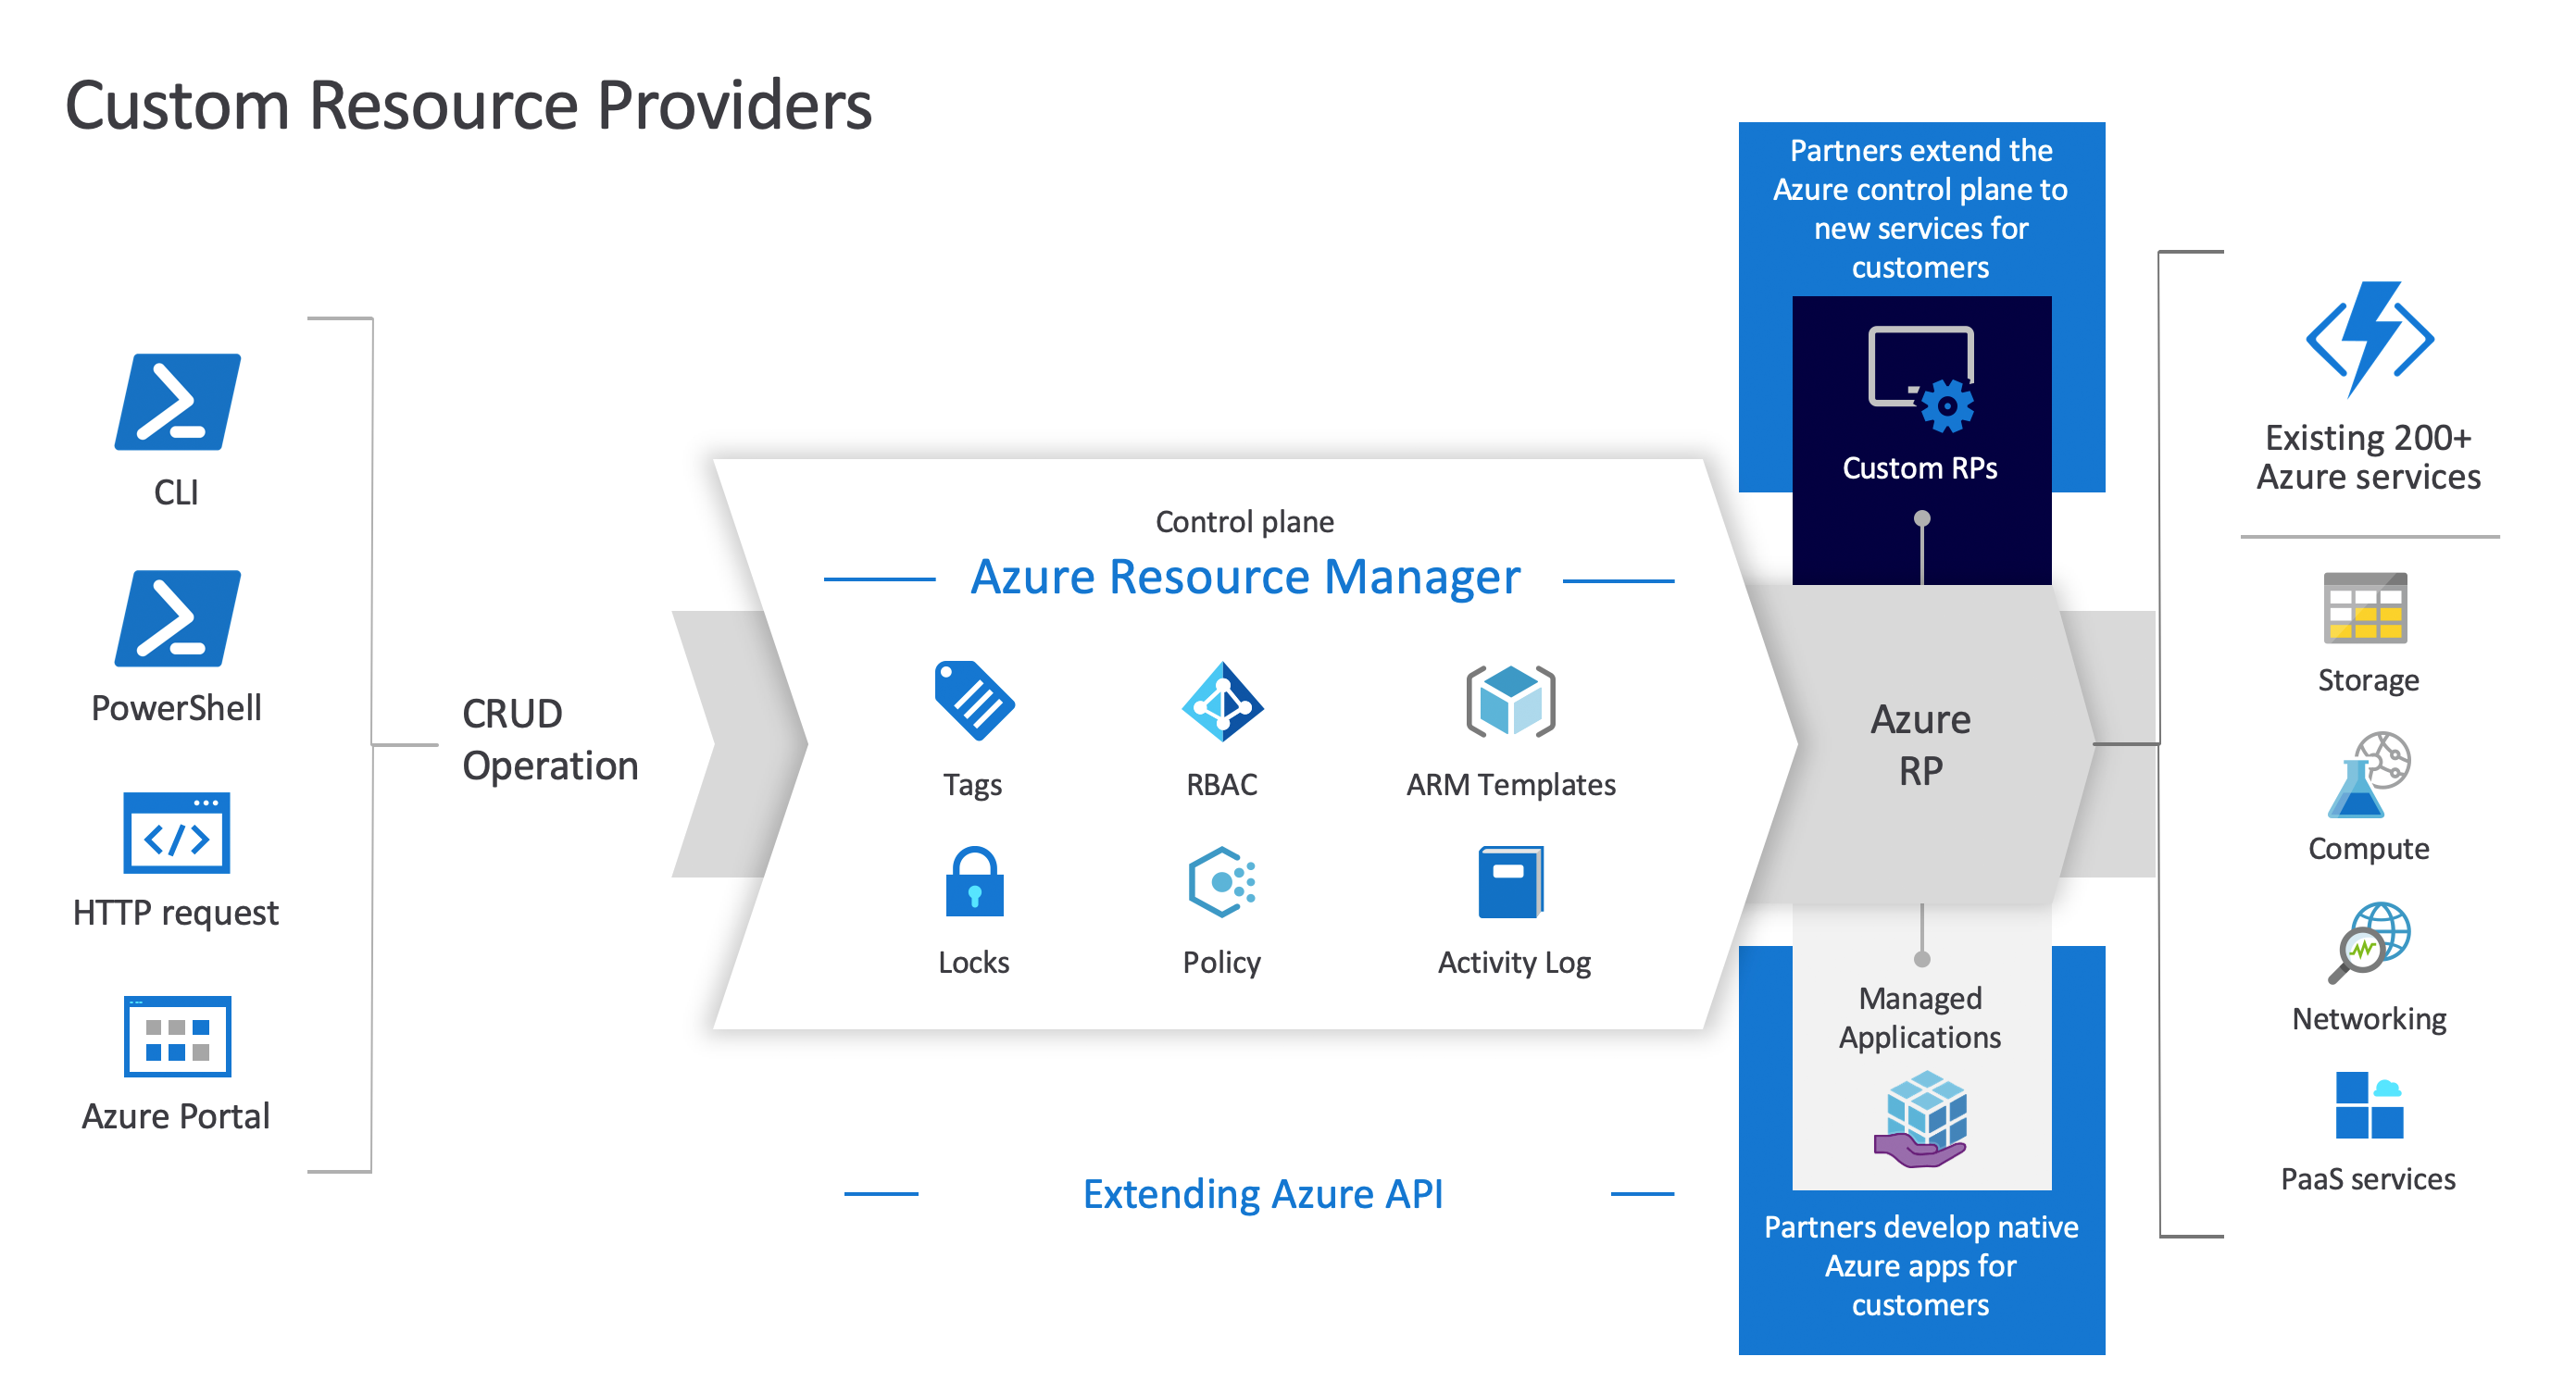  Azure Resource Manager とカスタム リソース プロバイダー、およびリソースとの関係を示した Azure Custom Resource Providers の図。